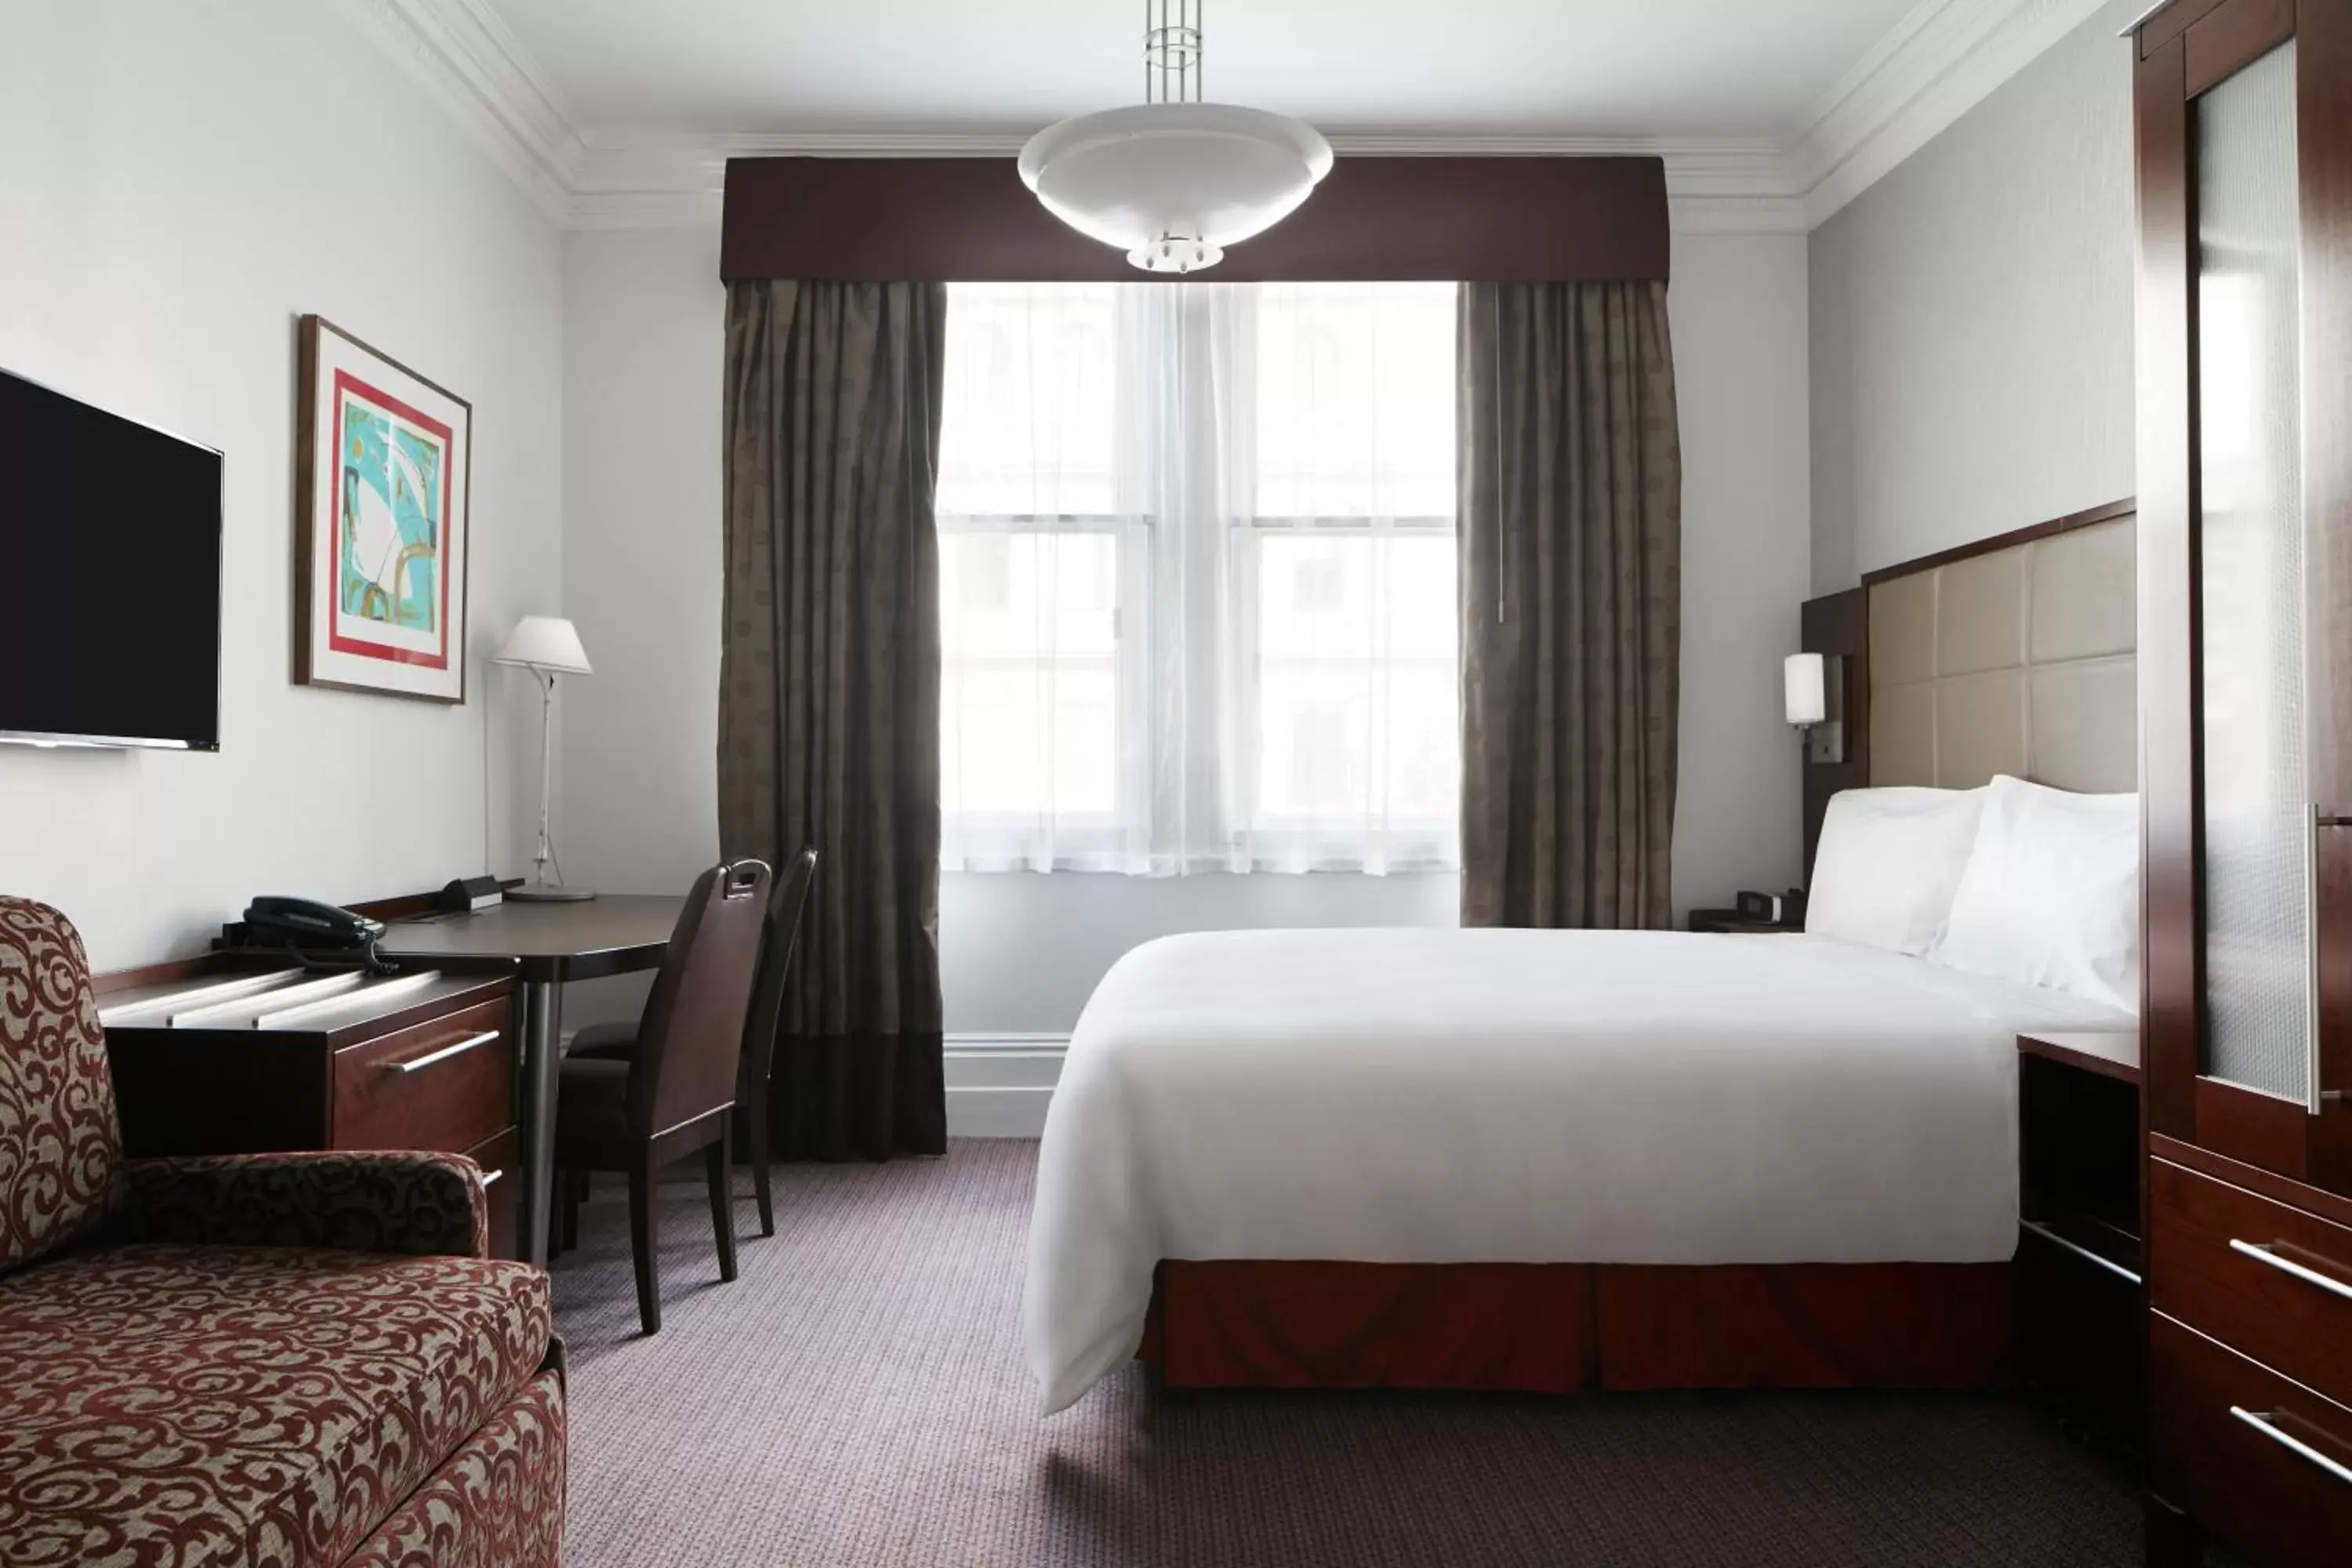 Bedroom in Club Quarters Hotel Trafalgar Square, London